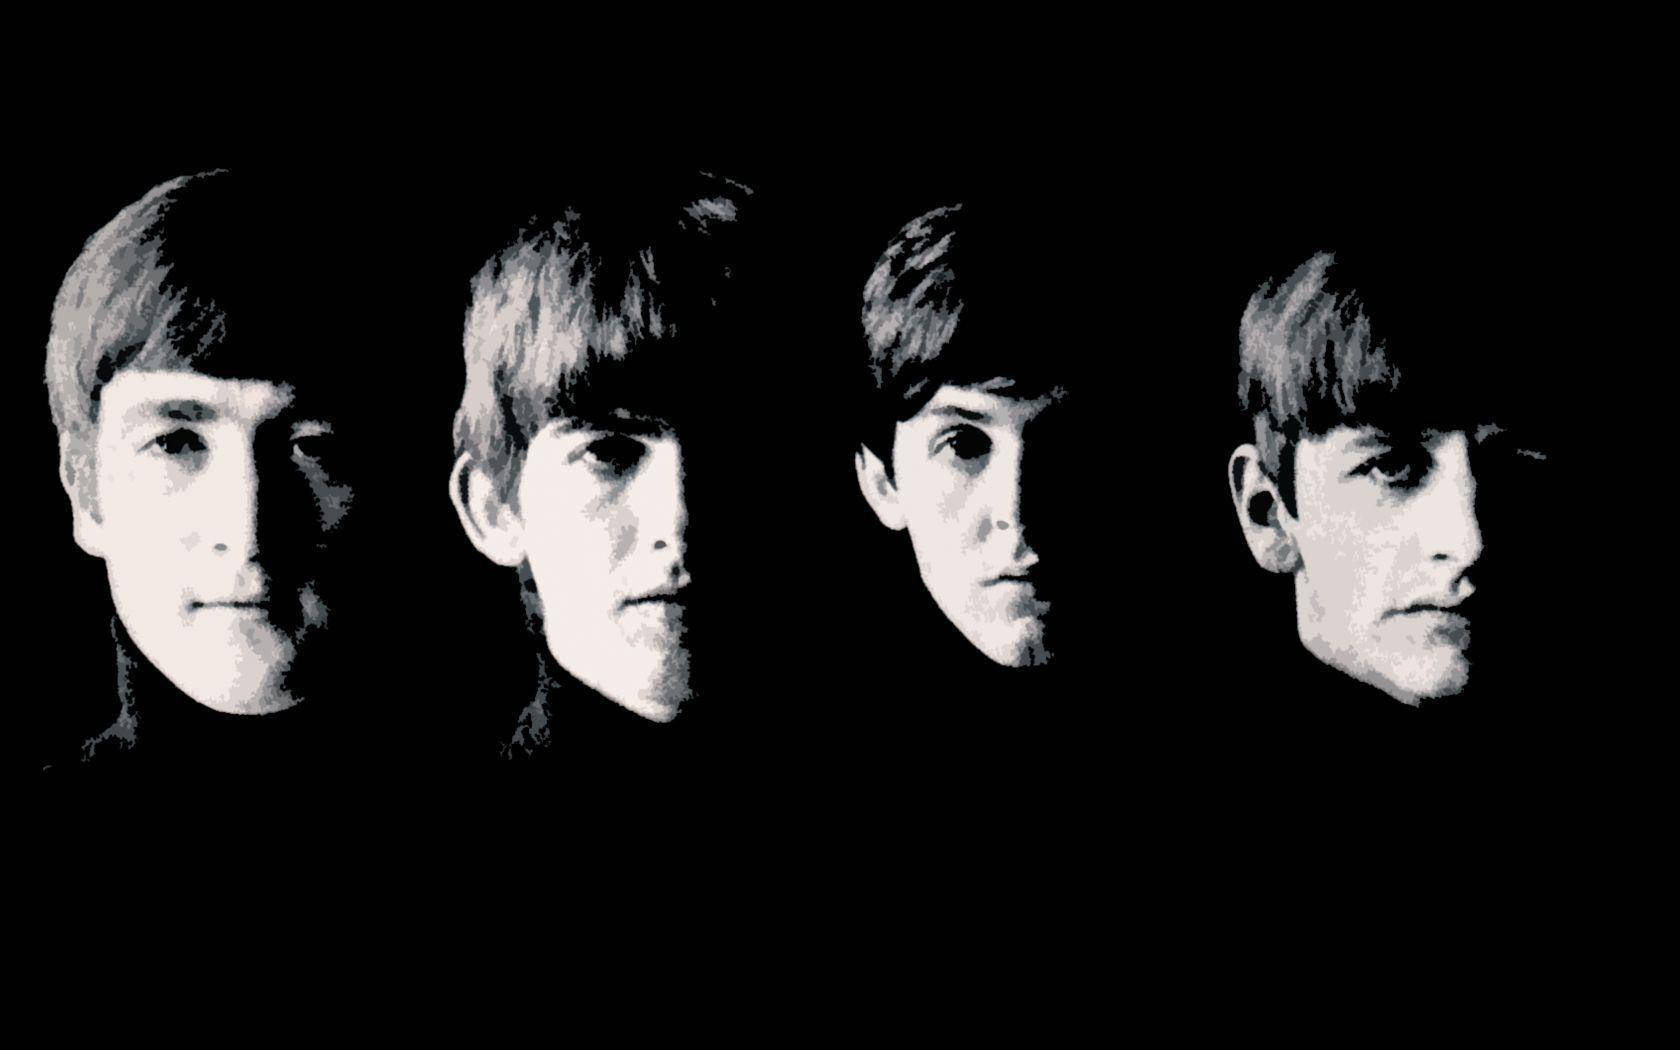 Free Beatles Wallpaper Downloads, [100+] Beatles Wallpapers for FREE |  